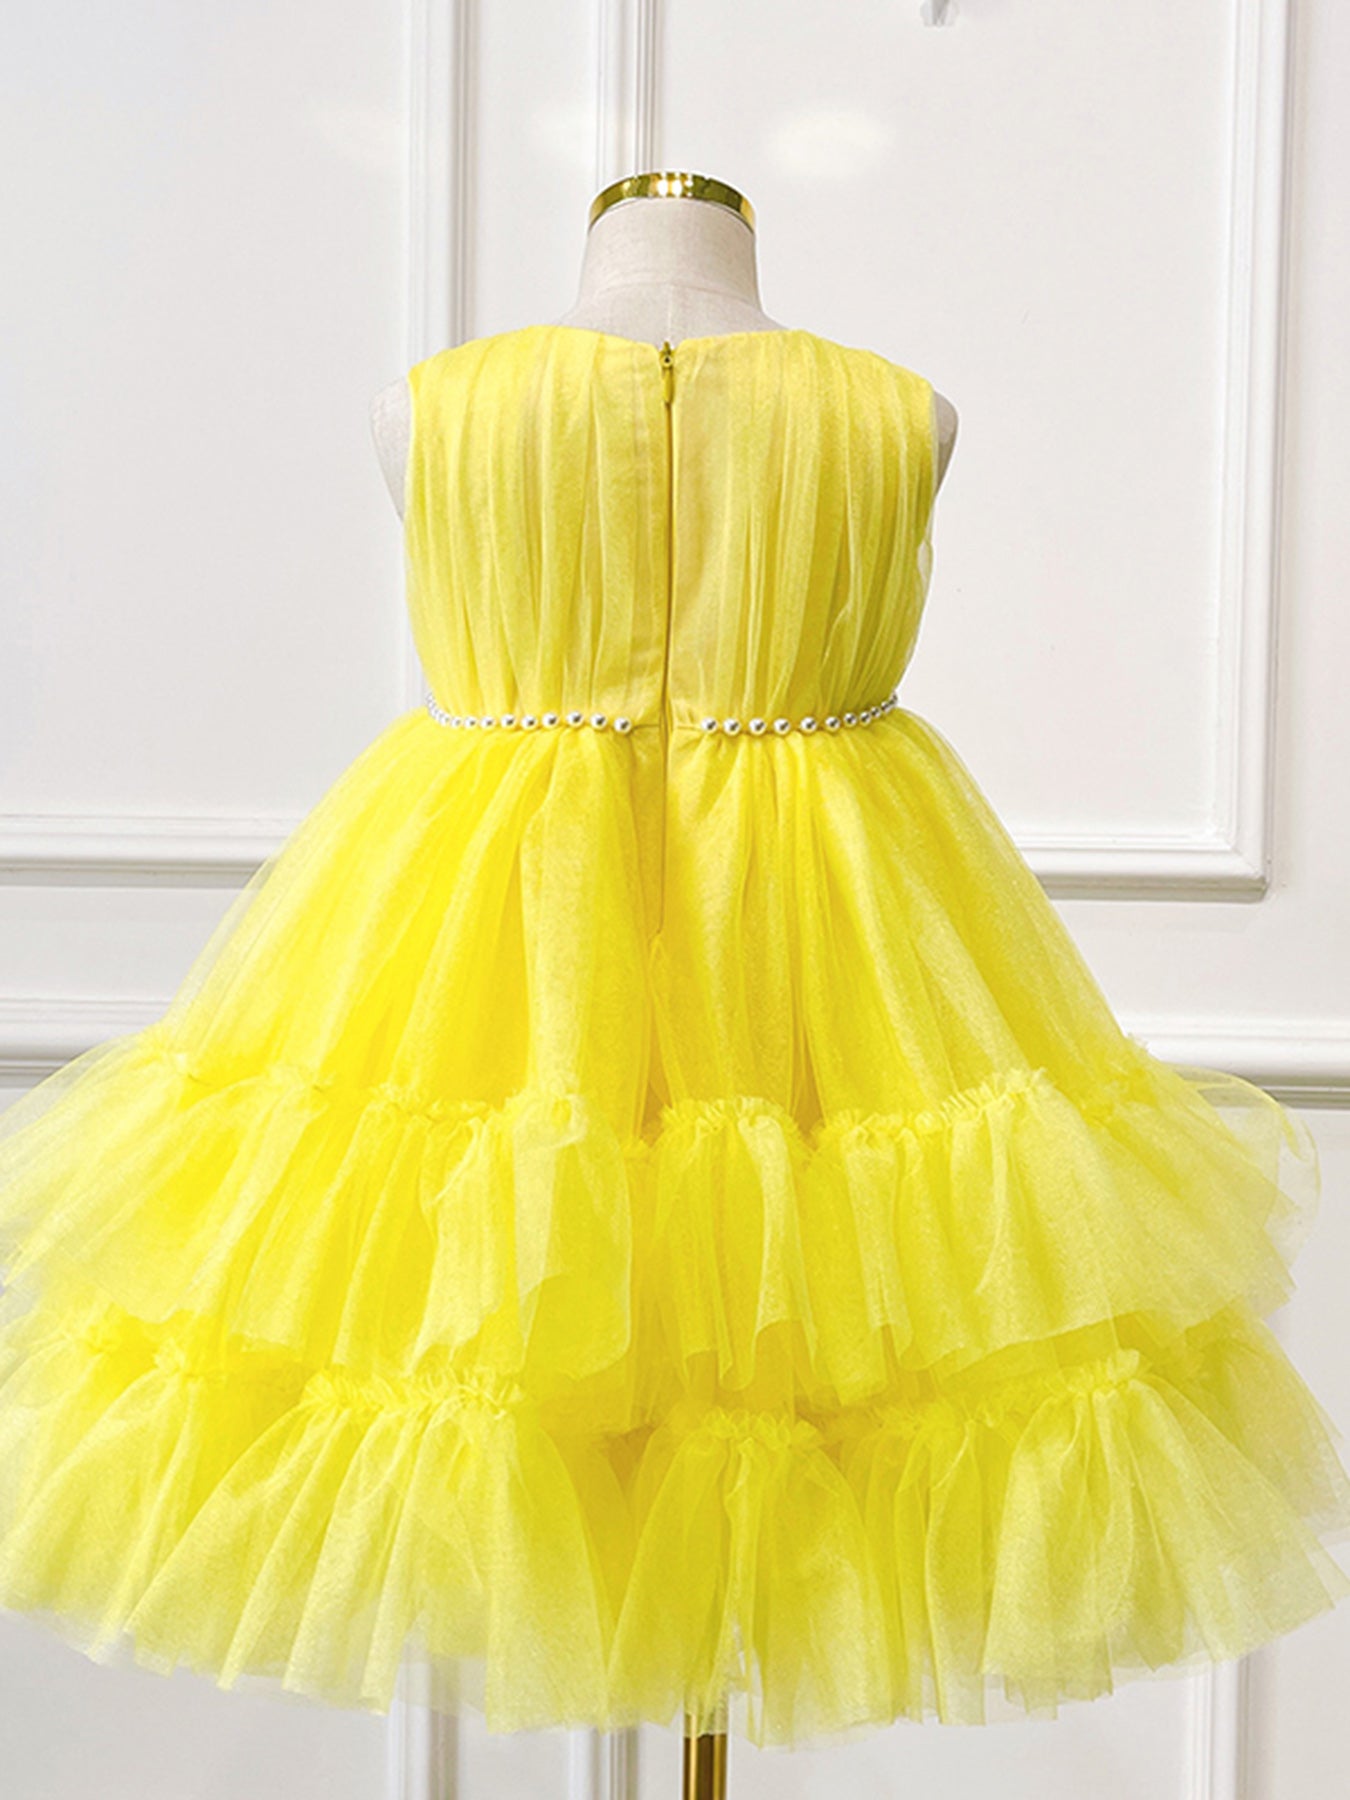 Yellow princess dress